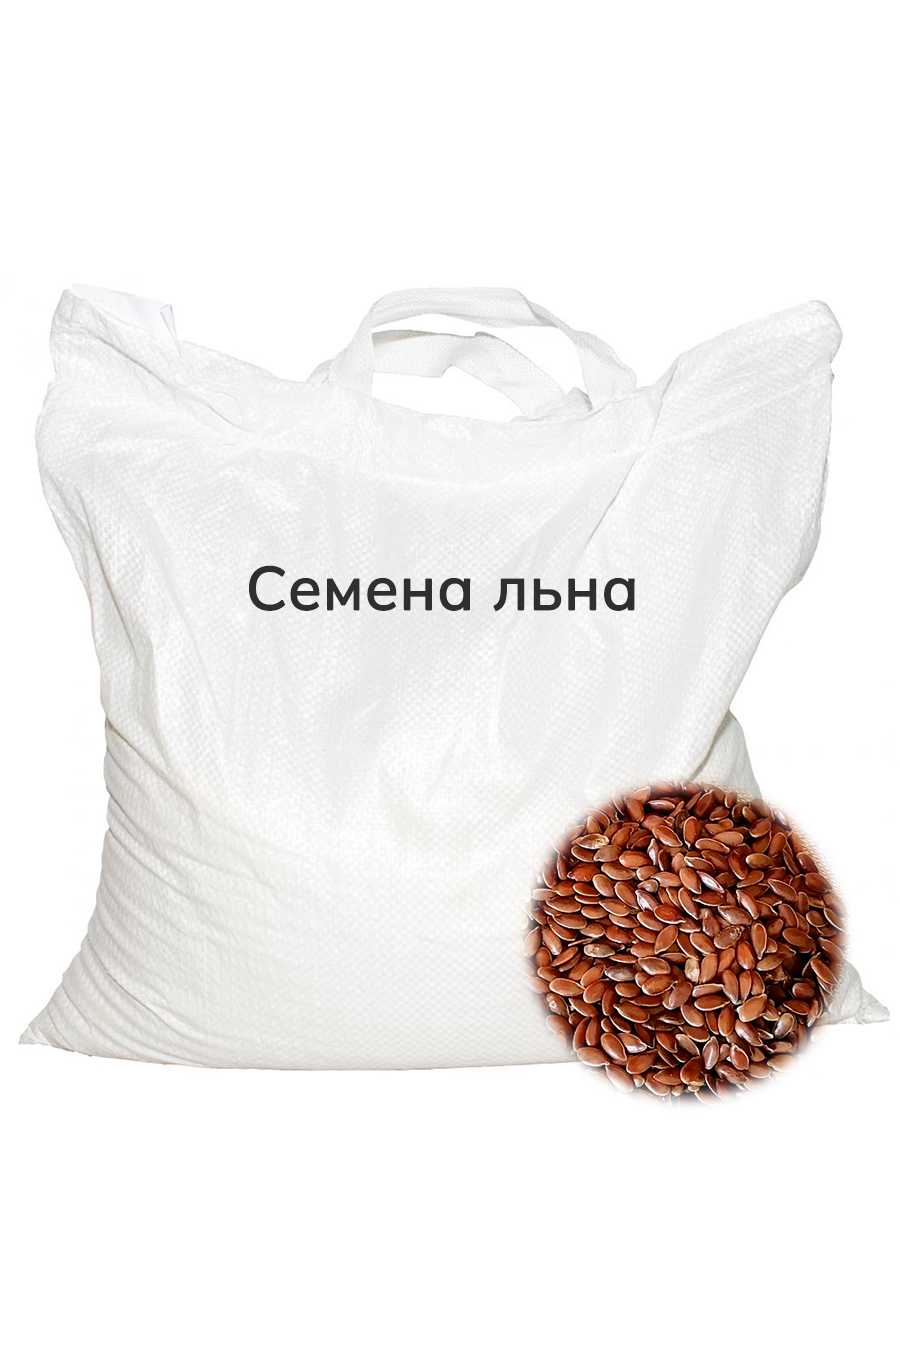 Семена Льна Василево Слобода 5 кг